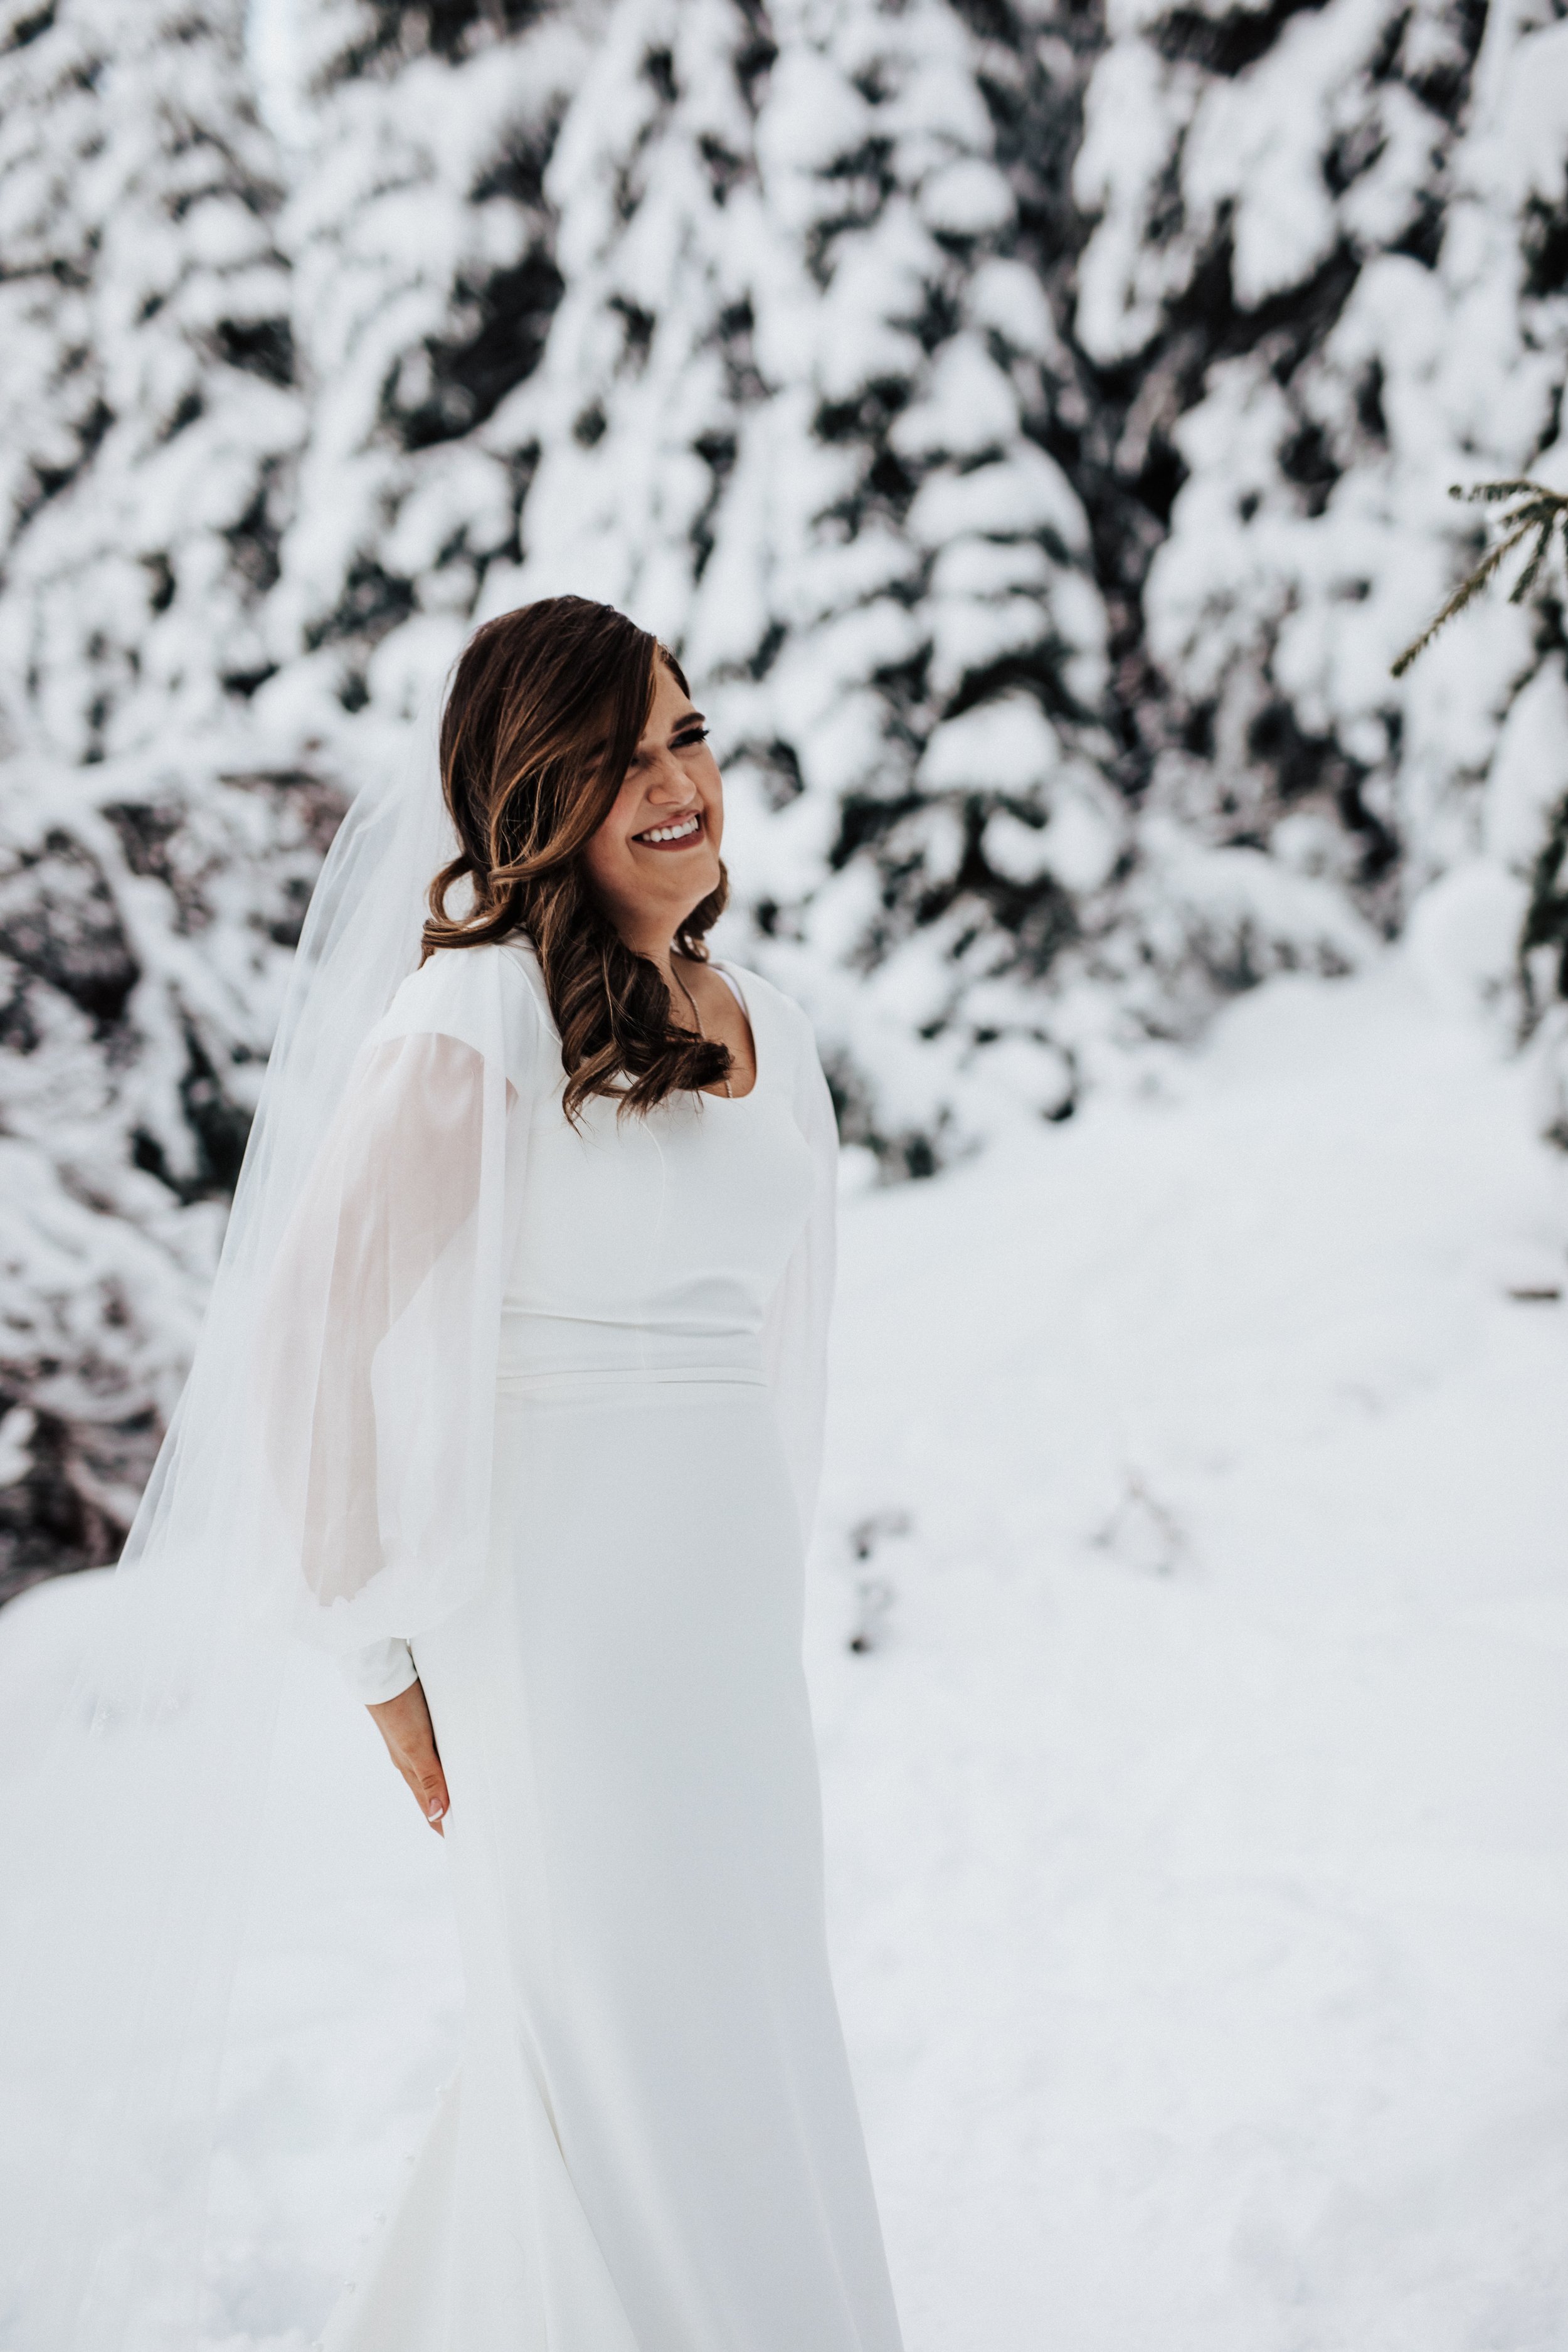 utah-mountain-winter-bridals-25.jpg